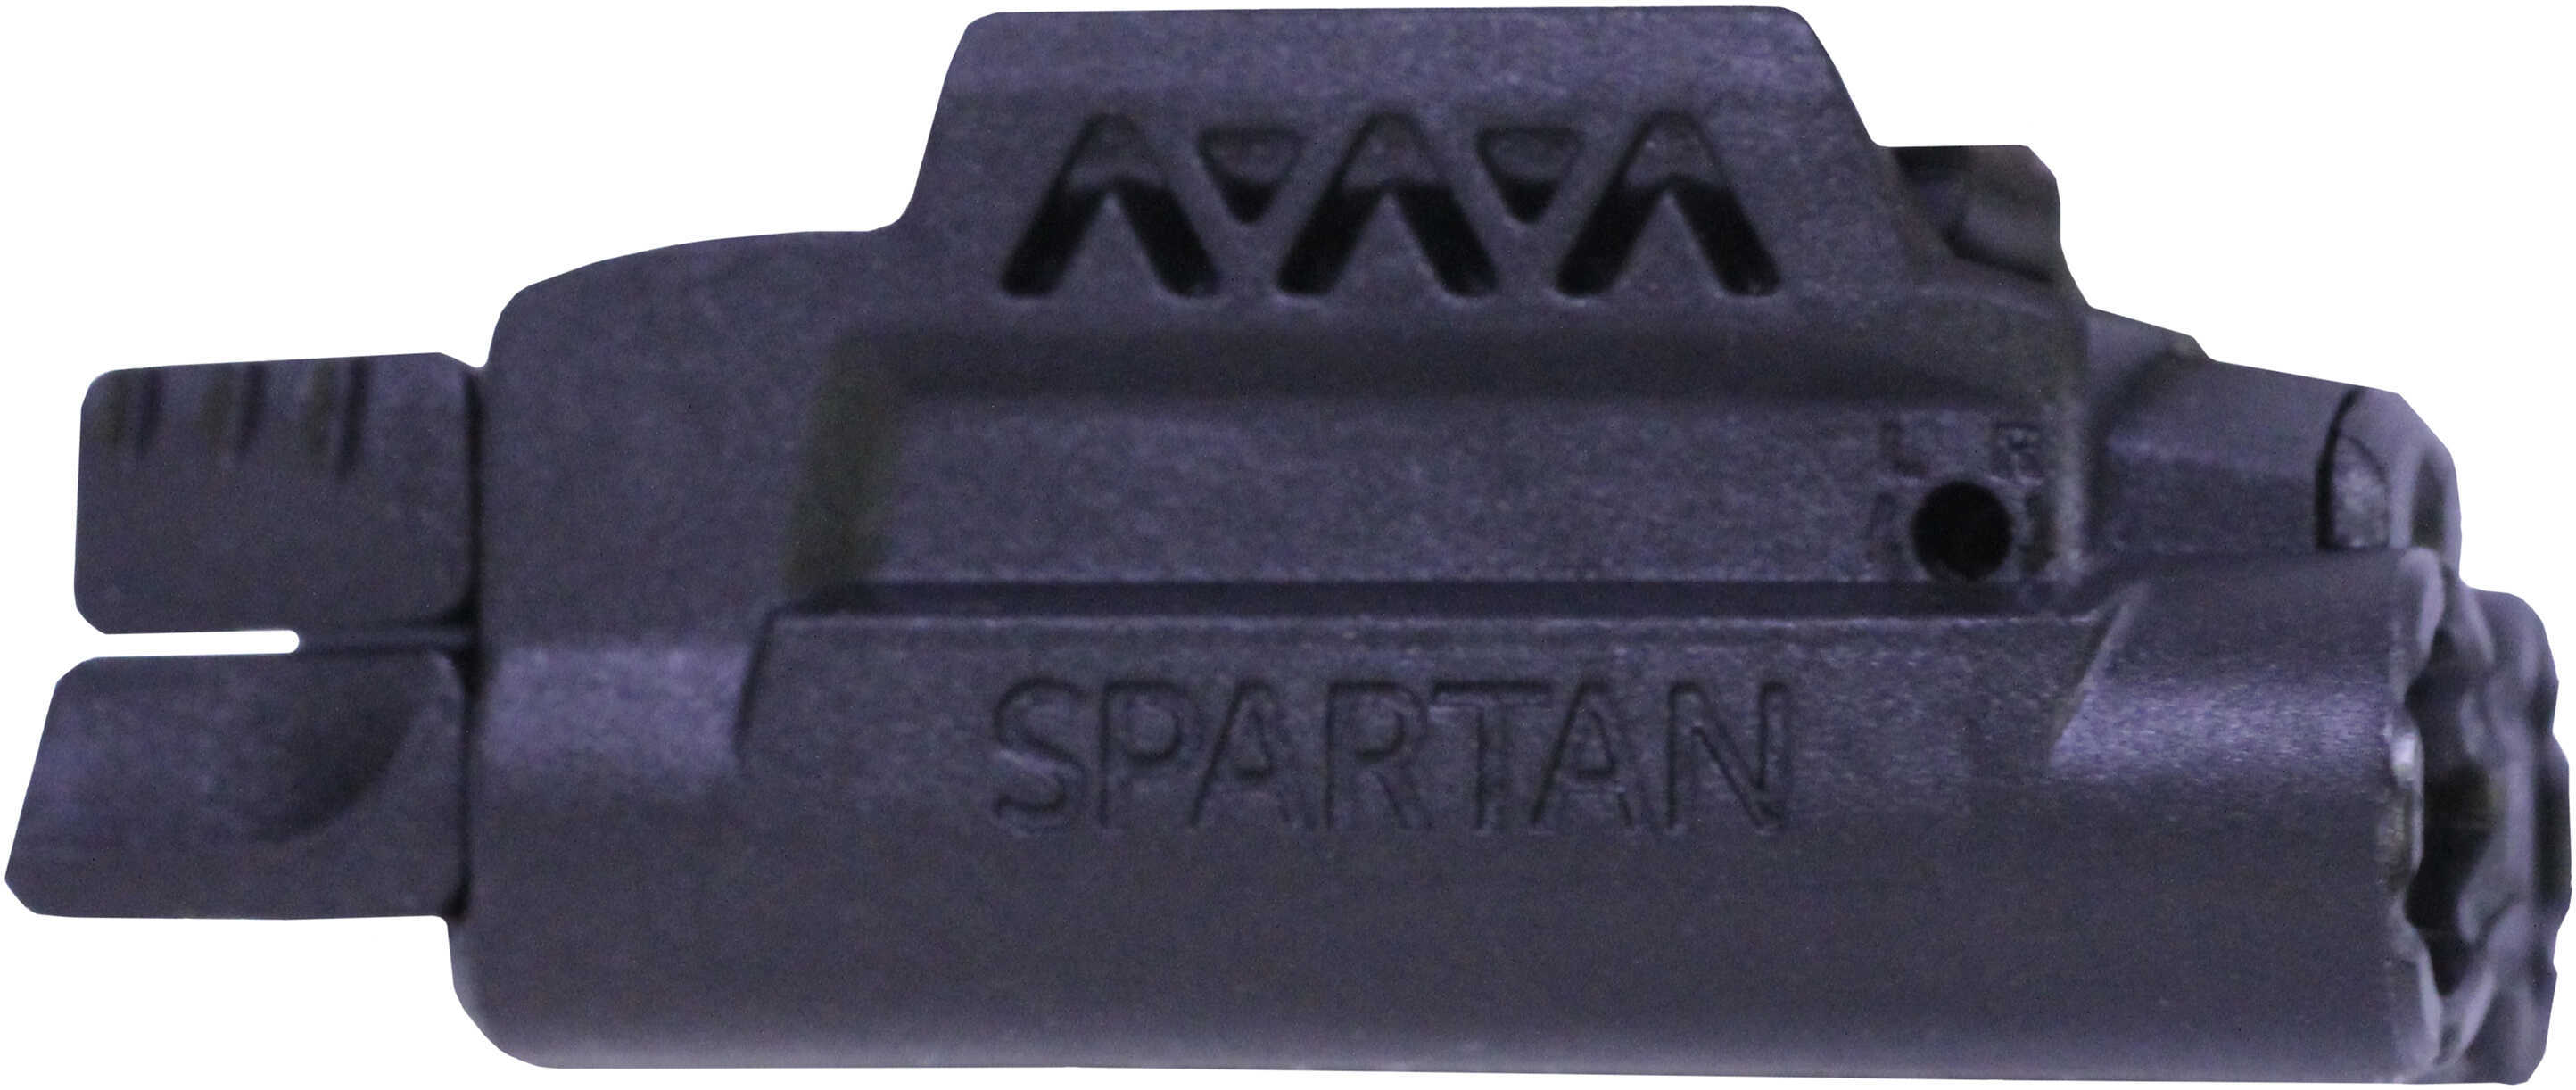 Spartan Adjustable Fit Laser/Light Combo Red Md:-img-1